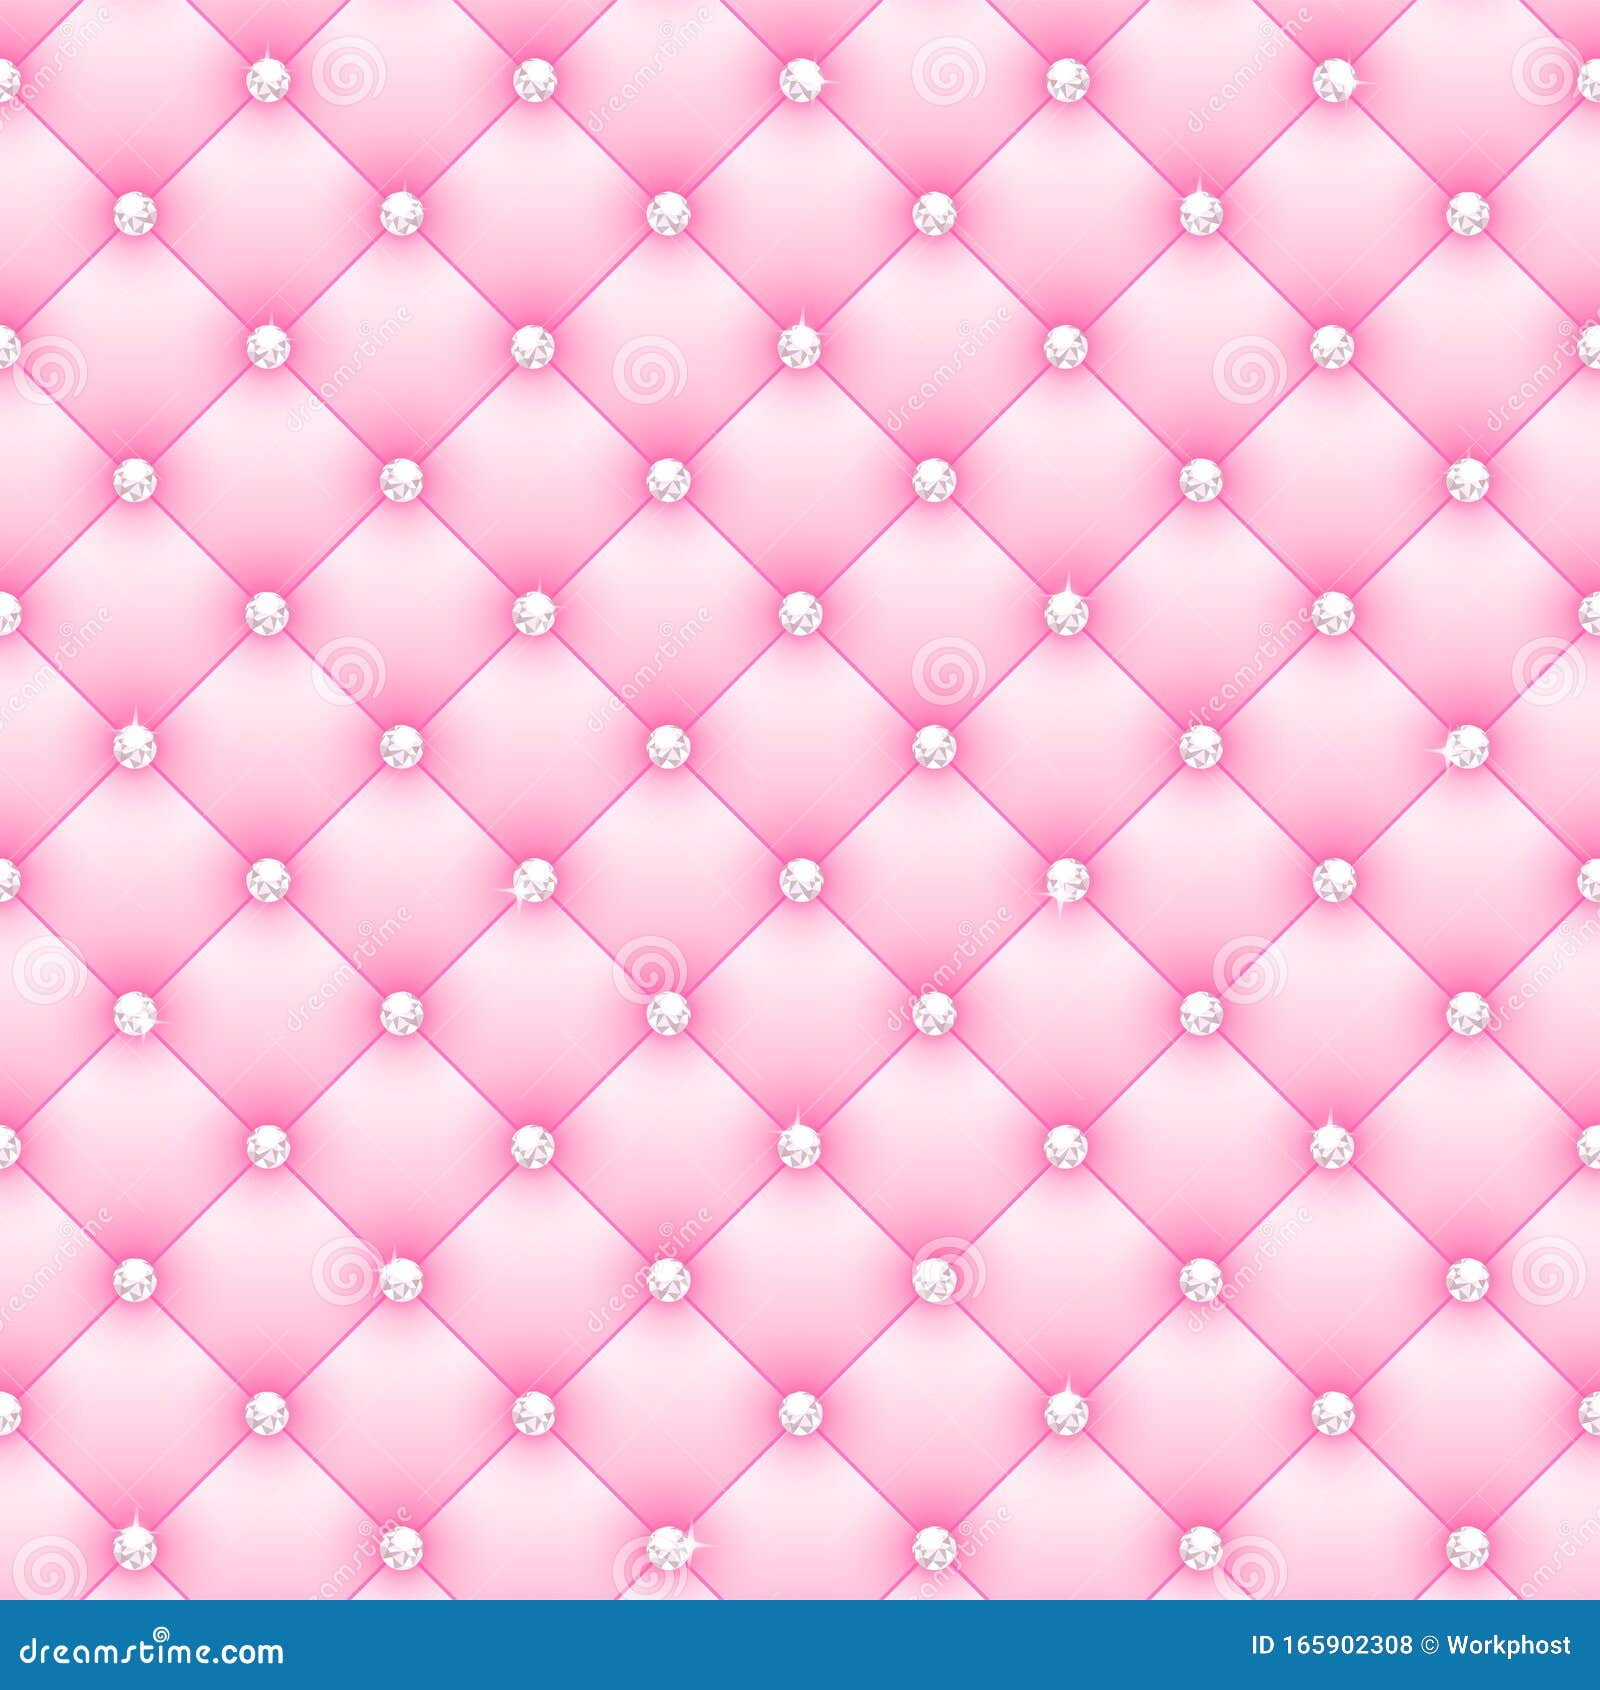 beautiful pink glamor background with diamond